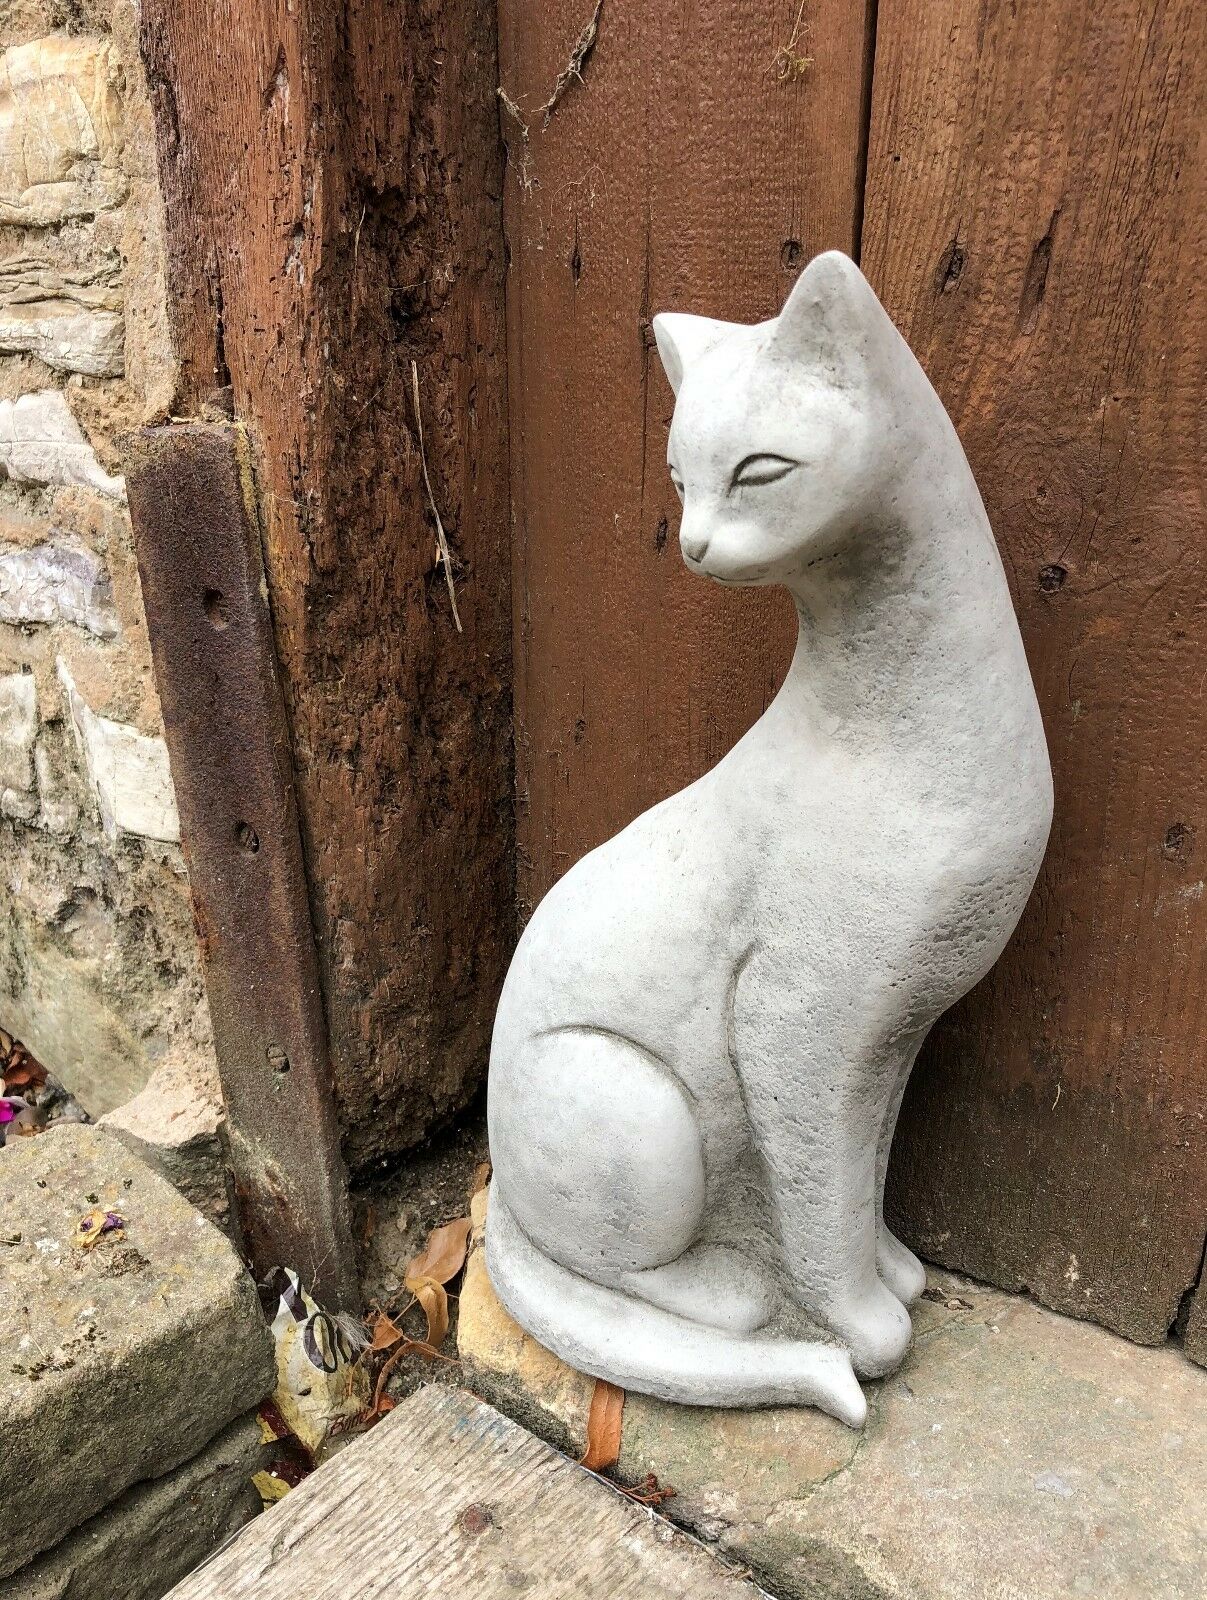 Set of 2 Stone Siamese Cat Ornaments